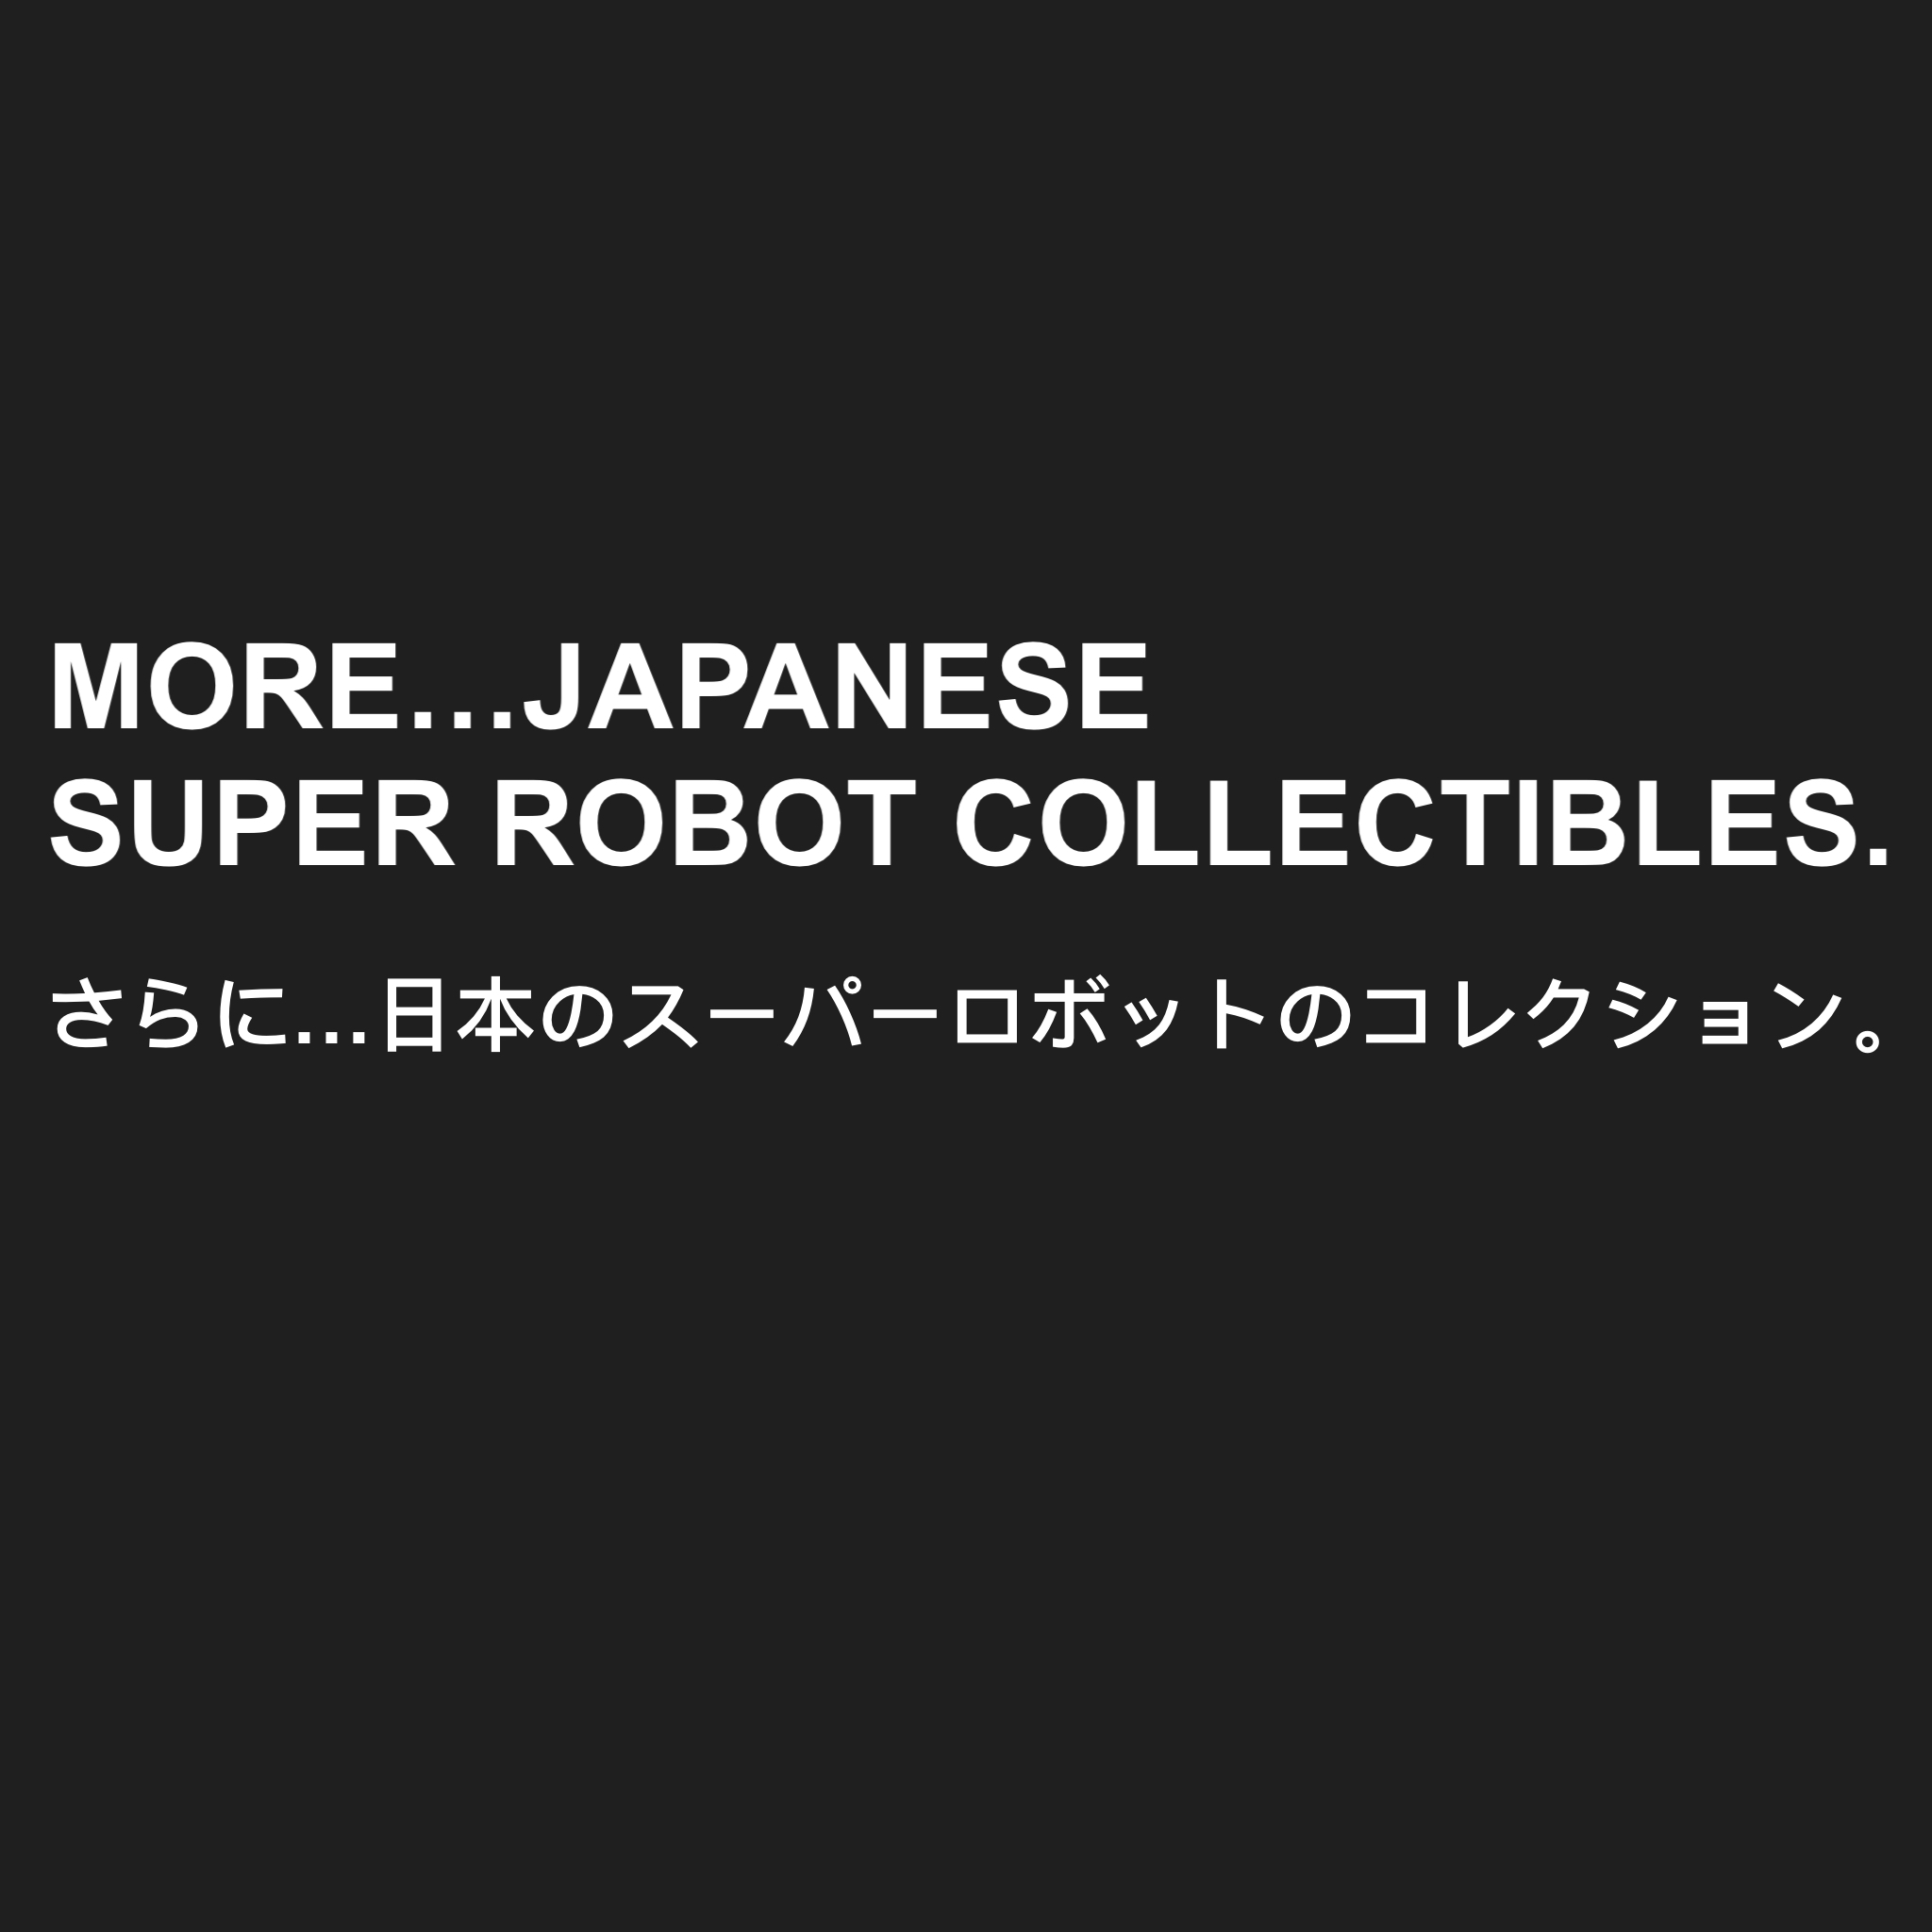 MORE JAPANESE SUPER ROBOT COLLECTIBLES